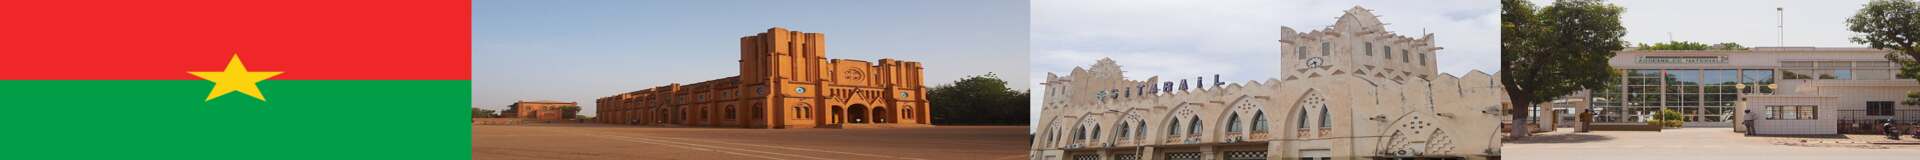 Global Burkina Faso Tenders